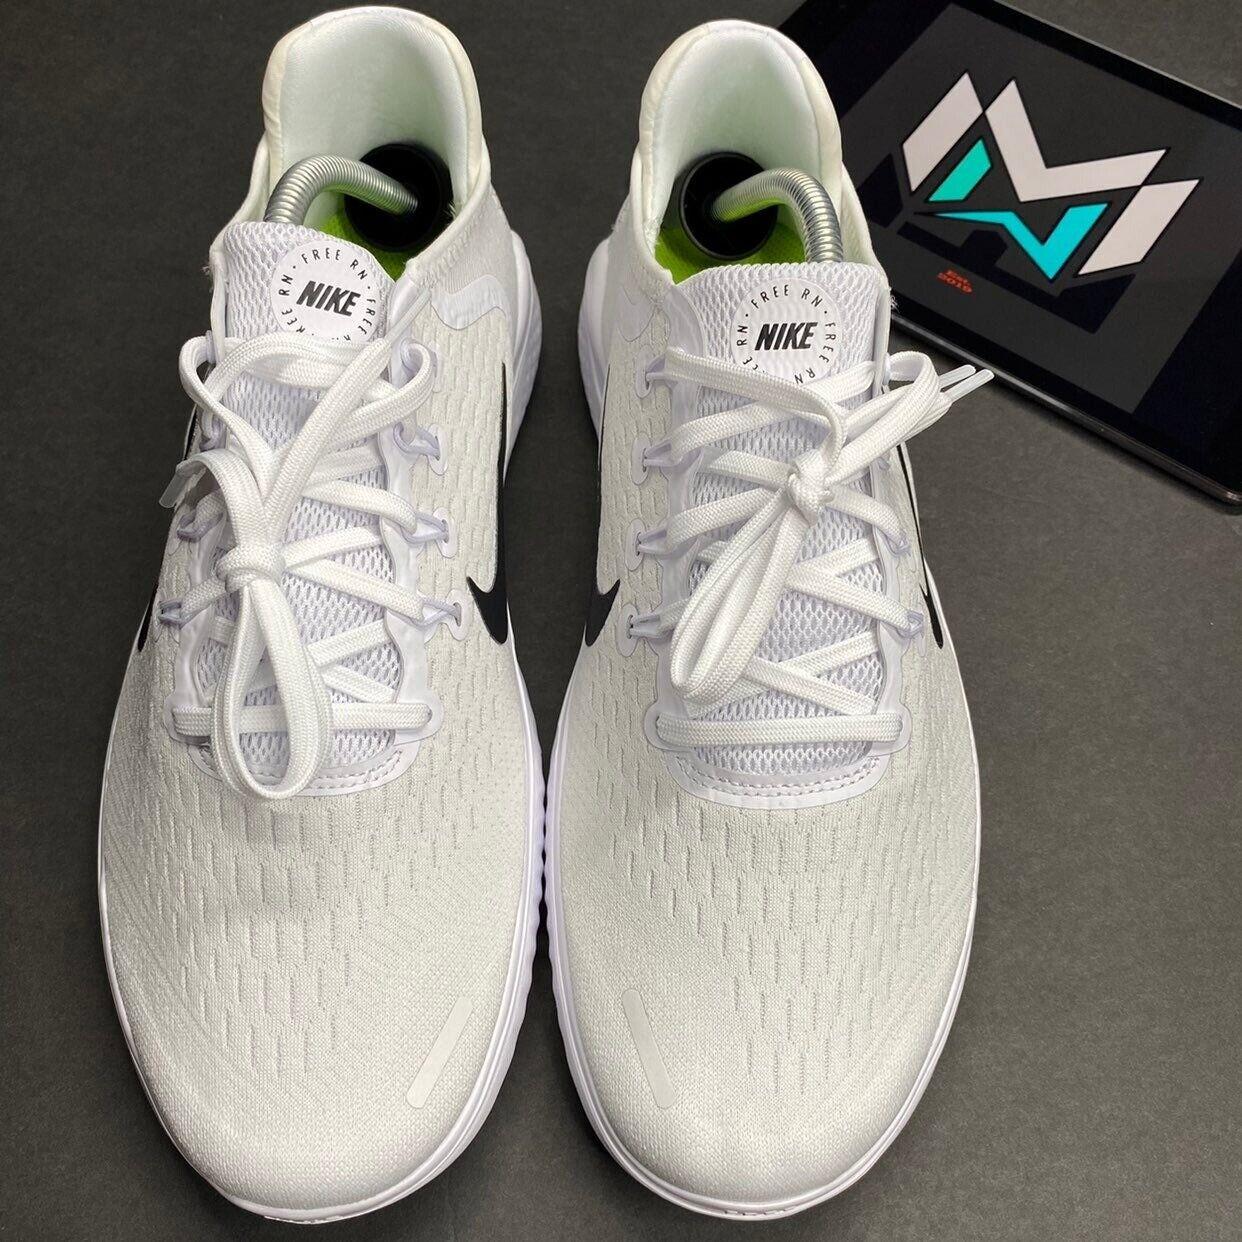 Nike shoes Free - White 3